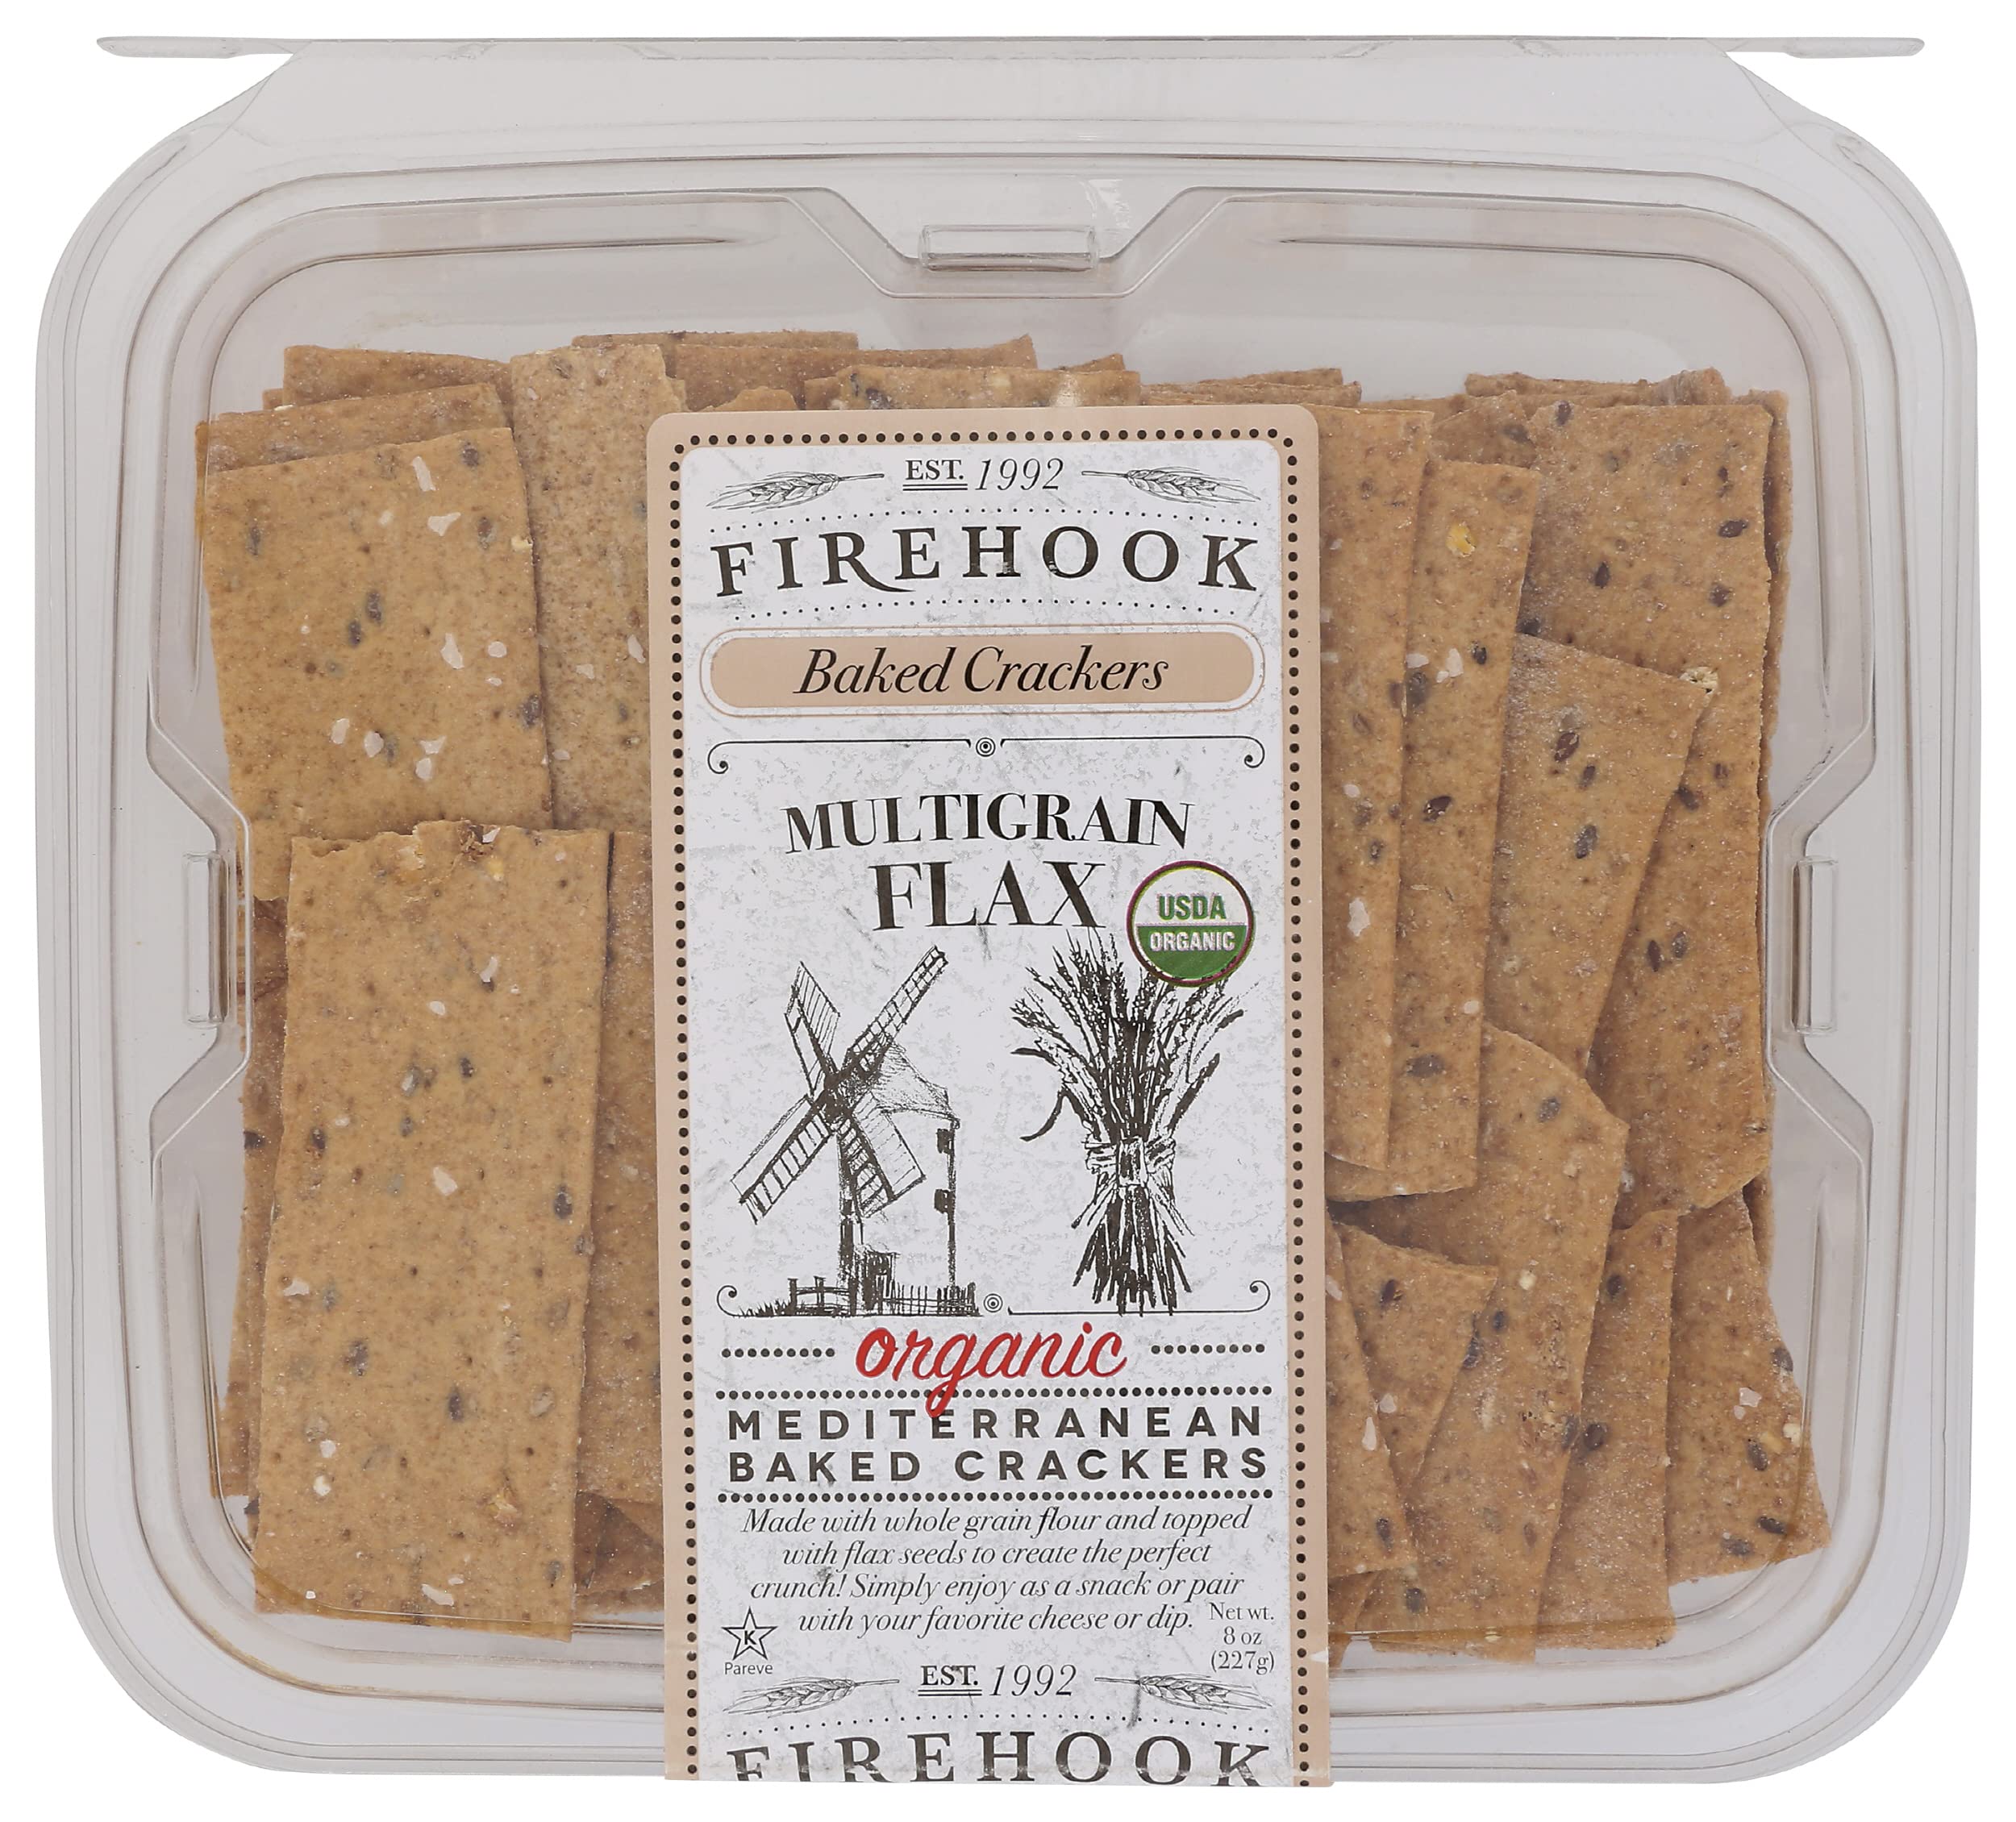 Firehook Baked Crackers Multigrain Flax Crackers 8oz 12ct